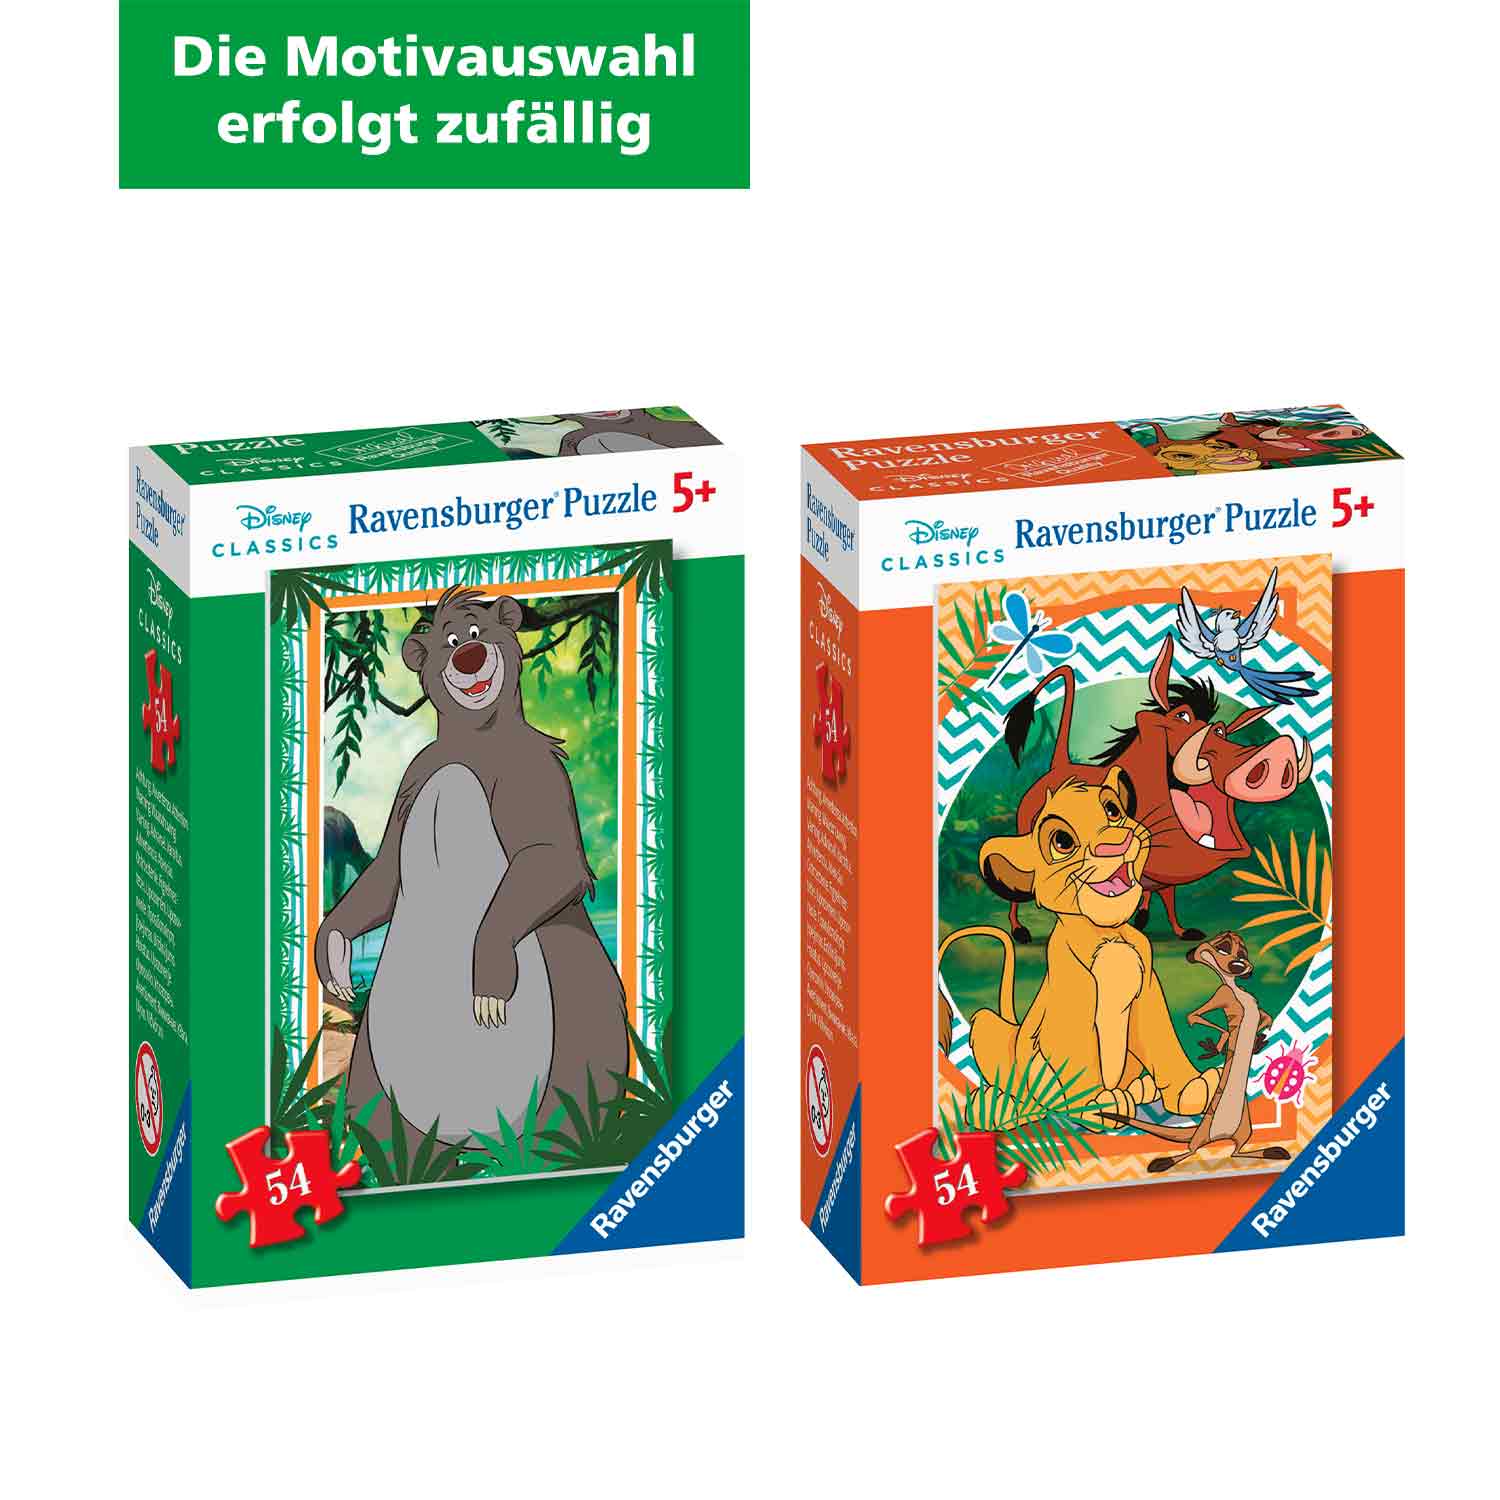 Ravensburger Mini-Puzzle Disney Animals 54 Teile (Motivauswahl erfolgt zufällig)